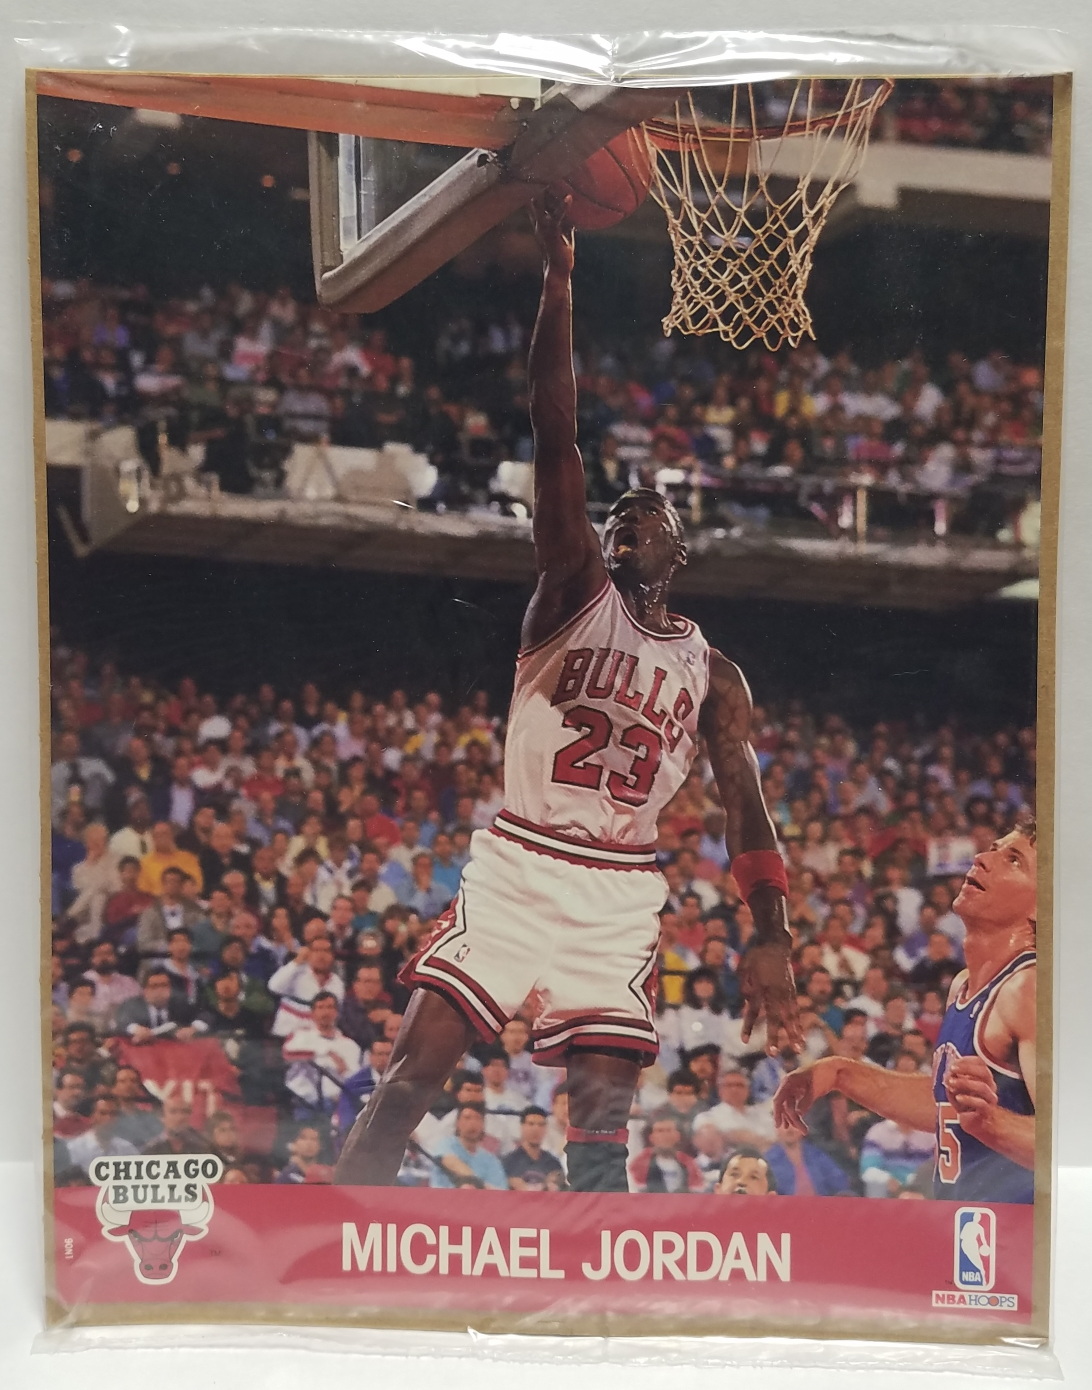 MICHAEL JORDAN 1990 NBA HOOPS 8x10 ACTION PHOTO NEW FACTORY SEALED IN BAG CHICAGO BULLS